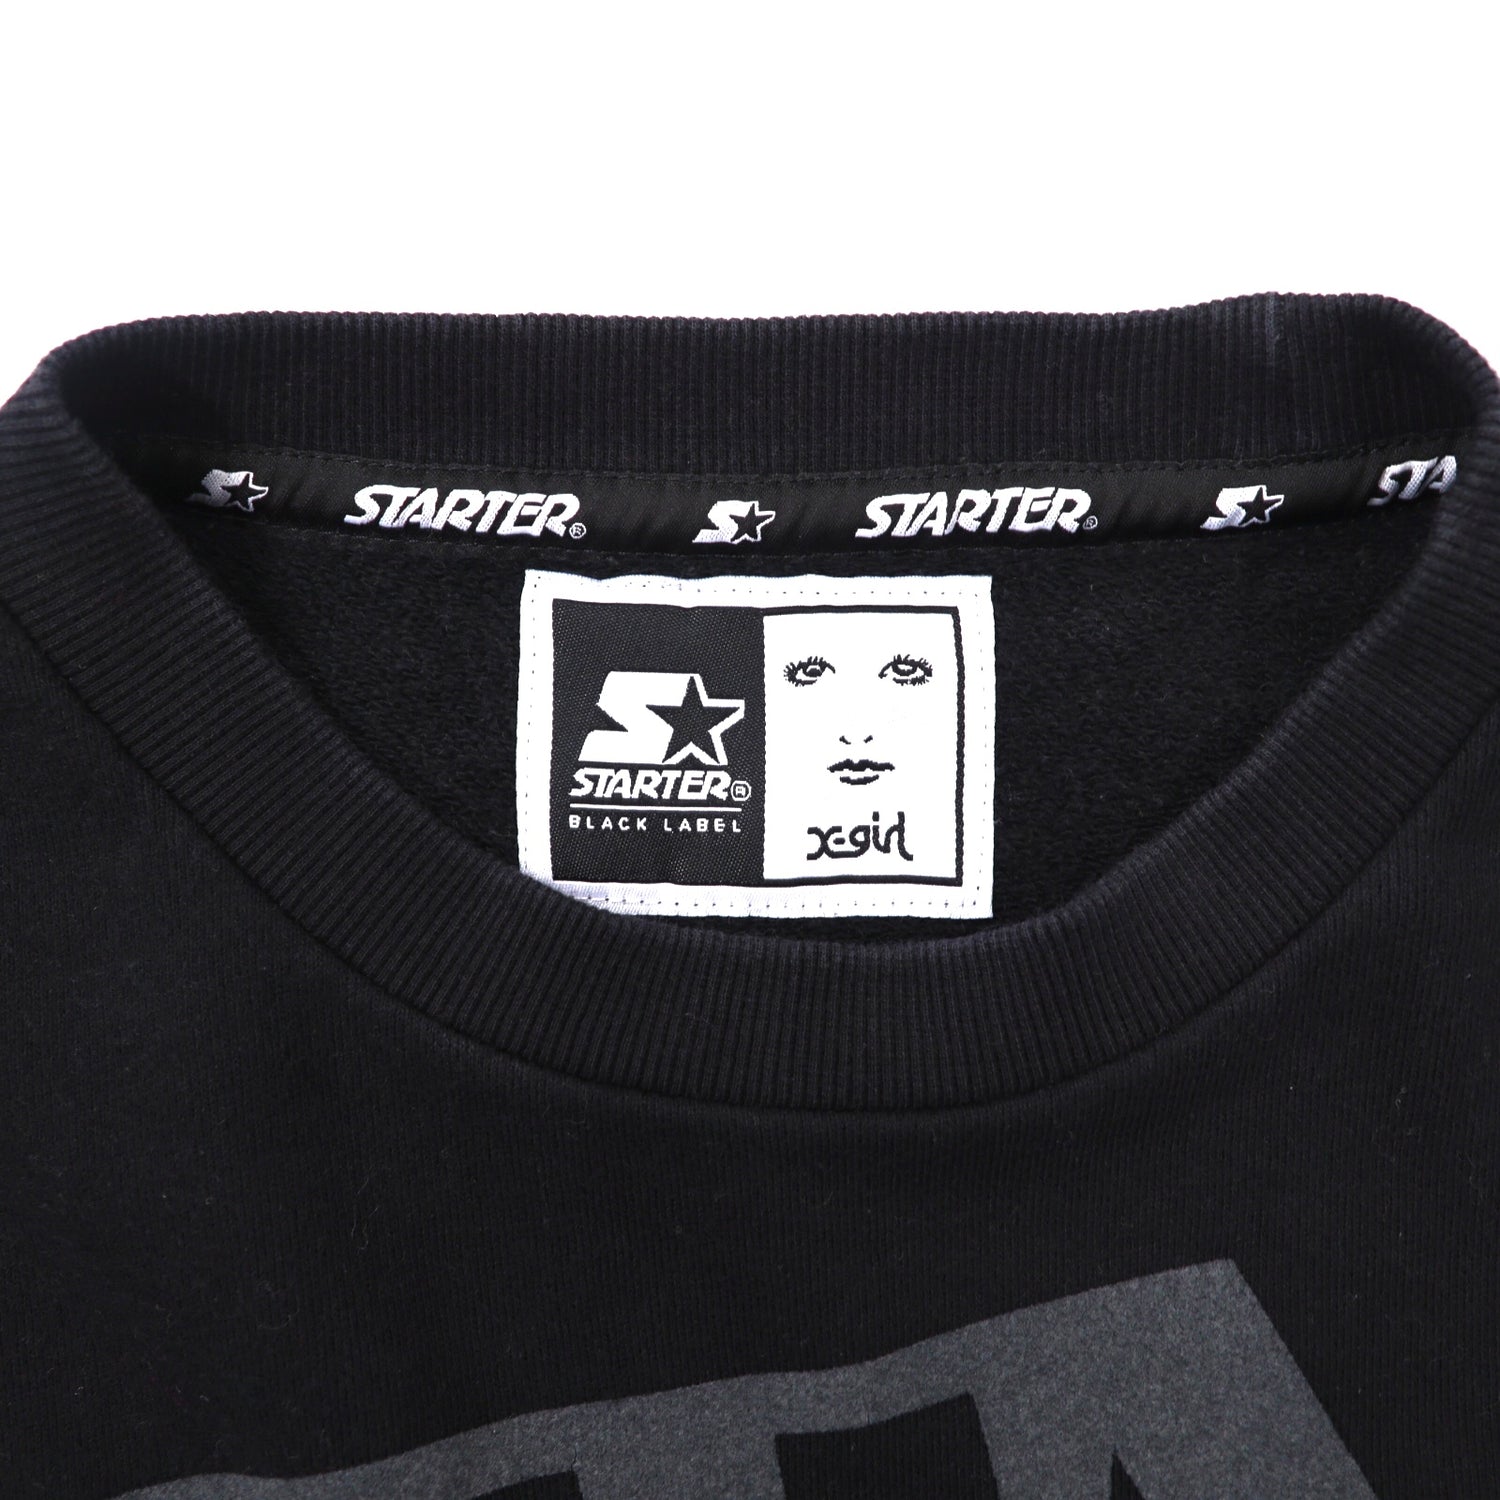 X-girl x stater crewneck Sweatshirt 1 Black Cotton Logo Print